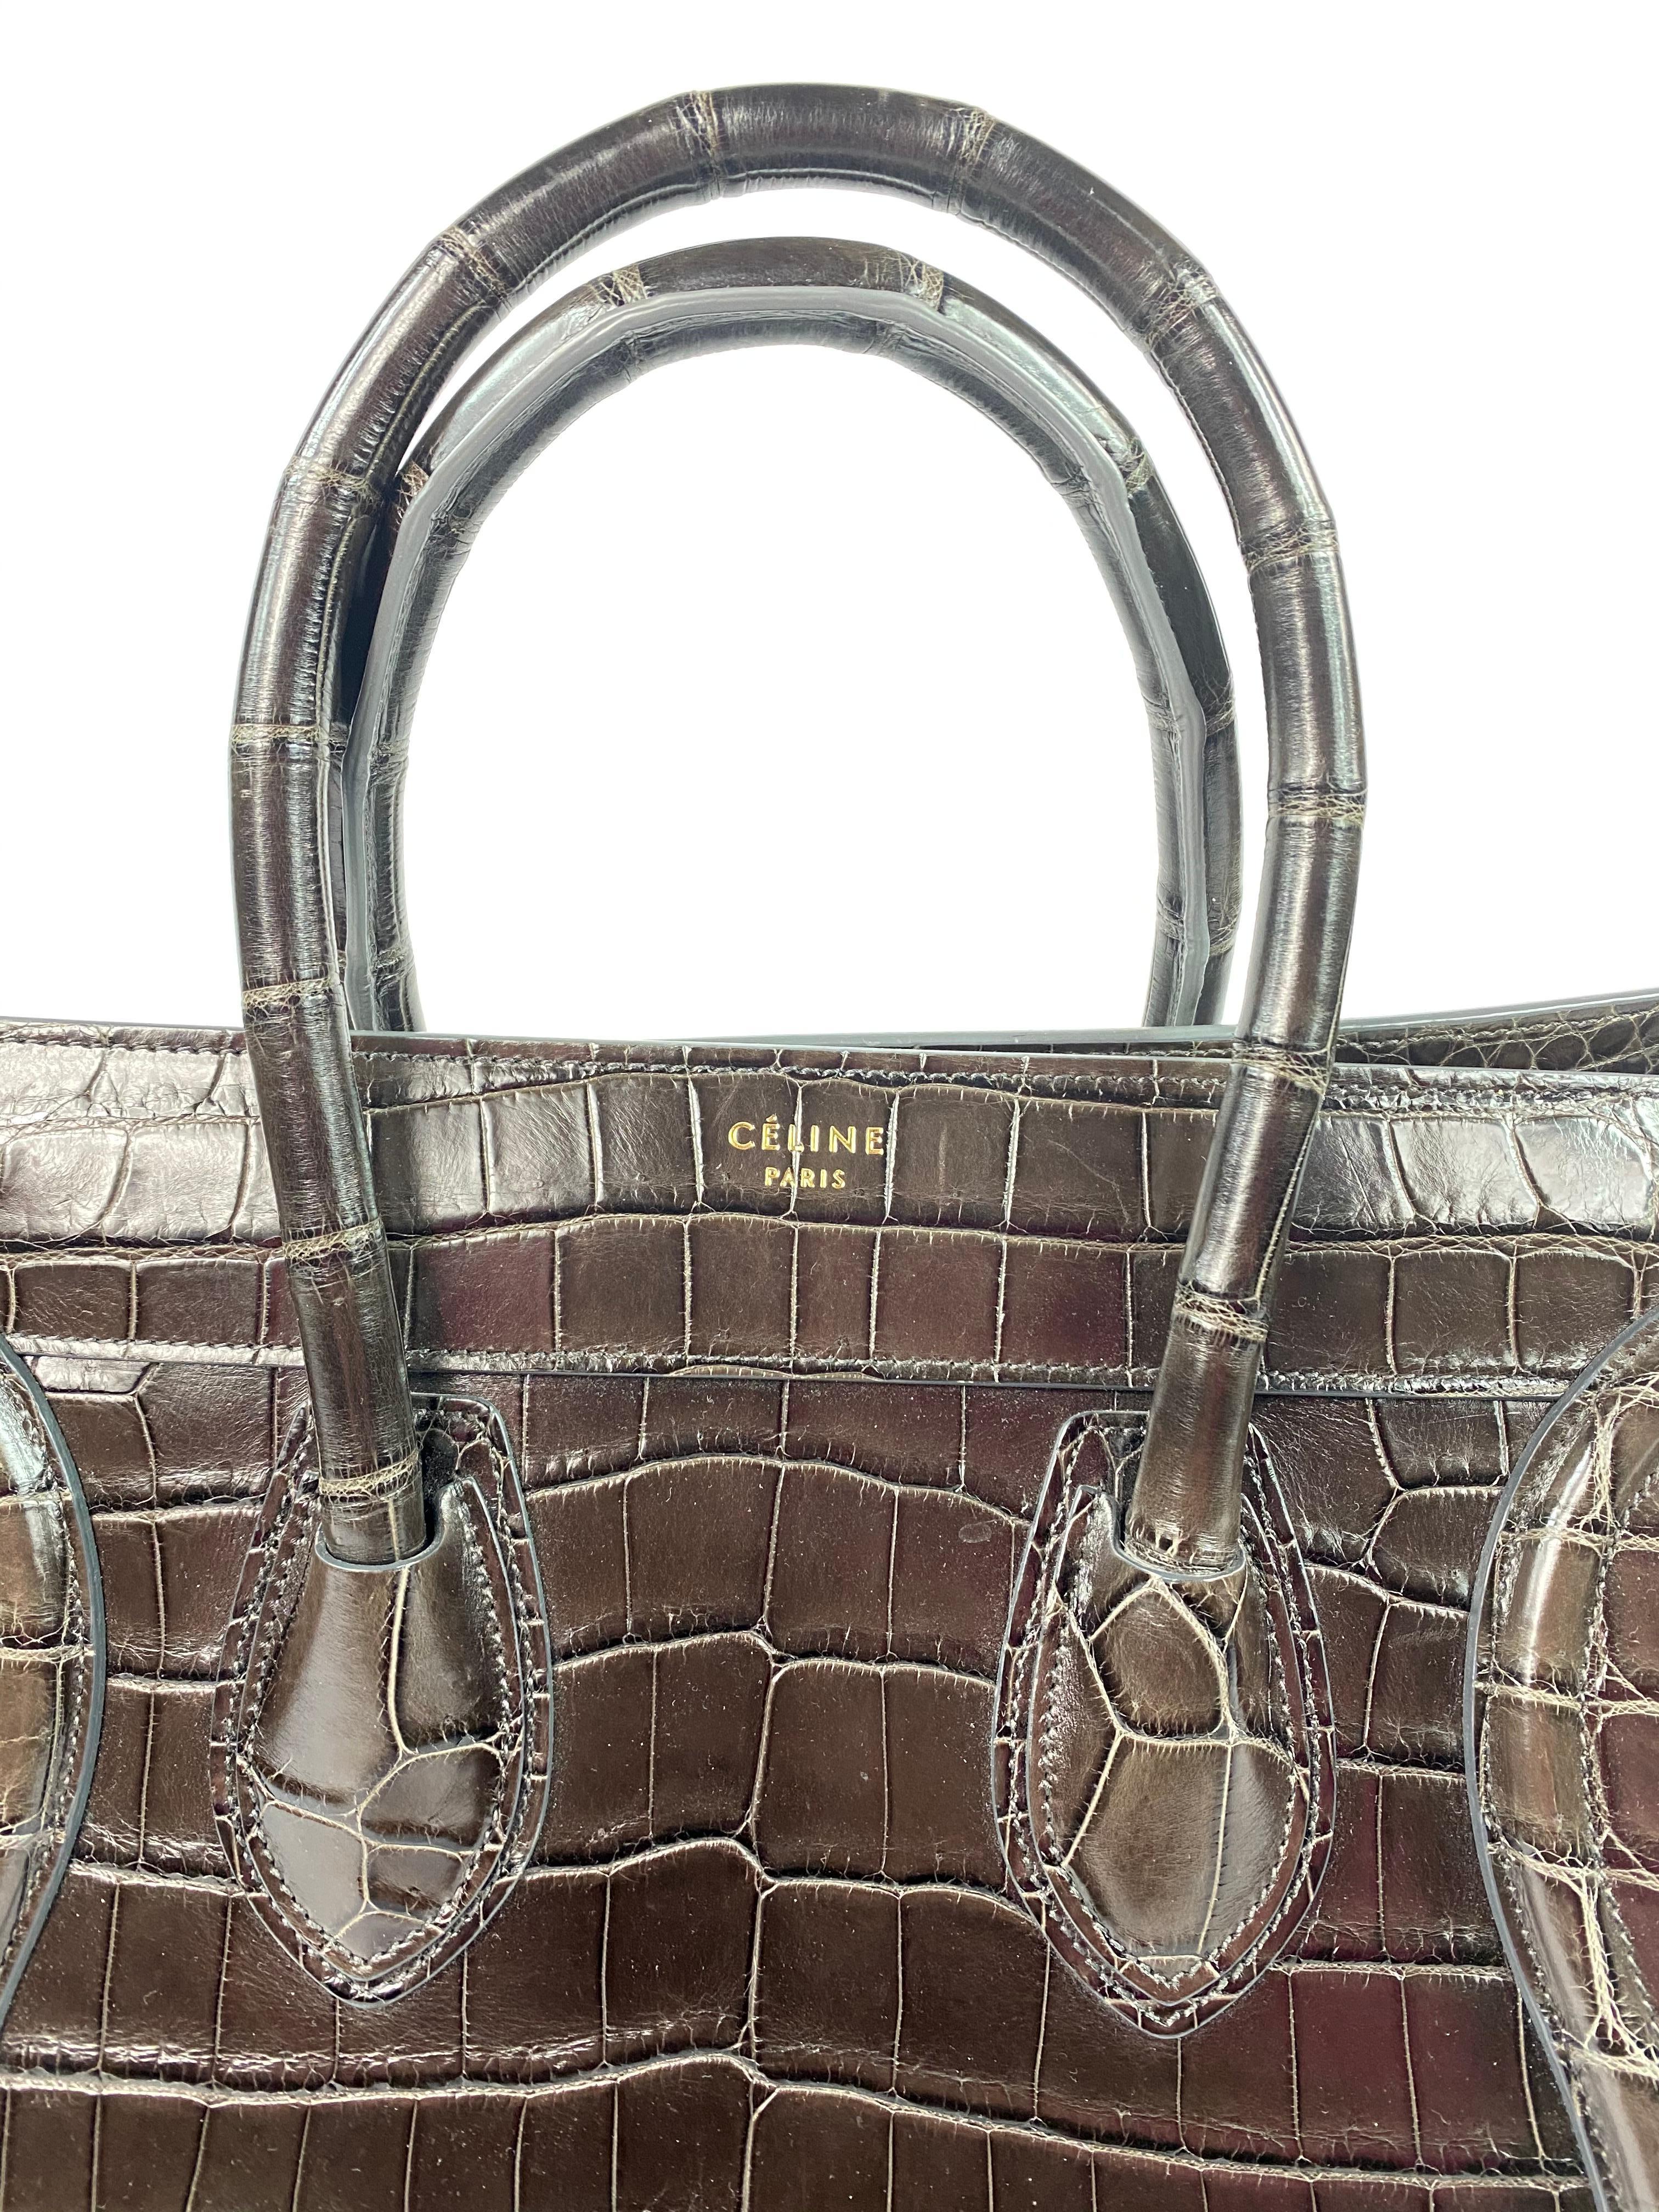 CELINE Brown Crocodile Medium Phantom Luggage Tote Bag

Product details:
Brown Crocodile leather
Handle drop measure 8”
Made in Italy
Est. Retail $38,000
